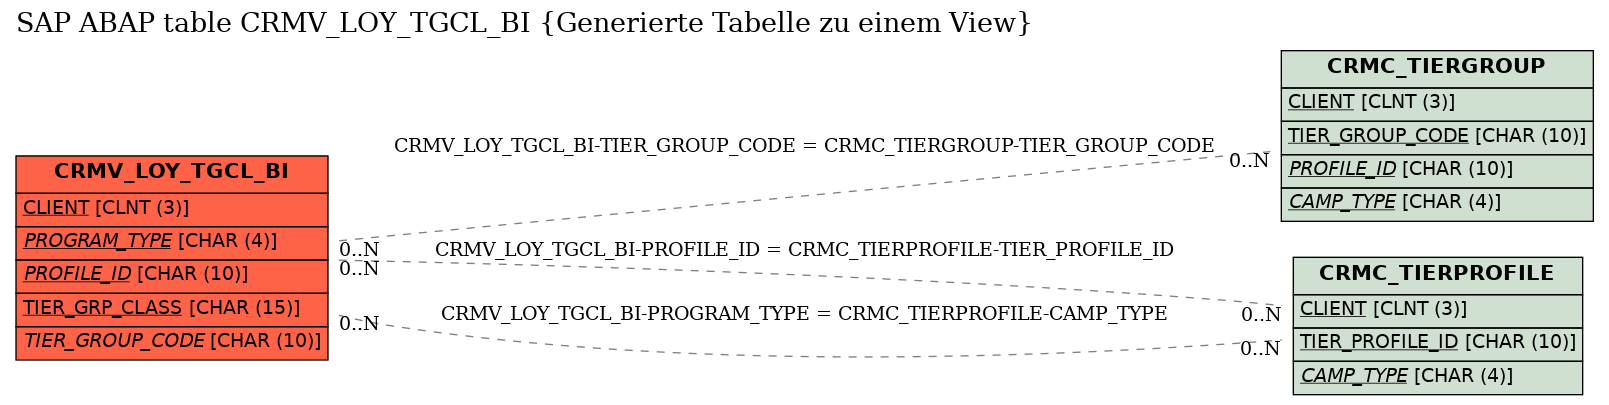 E-R Diagram for table CRMV_LOY_TGCL_BI (Generierte Tabelle zu einem View)